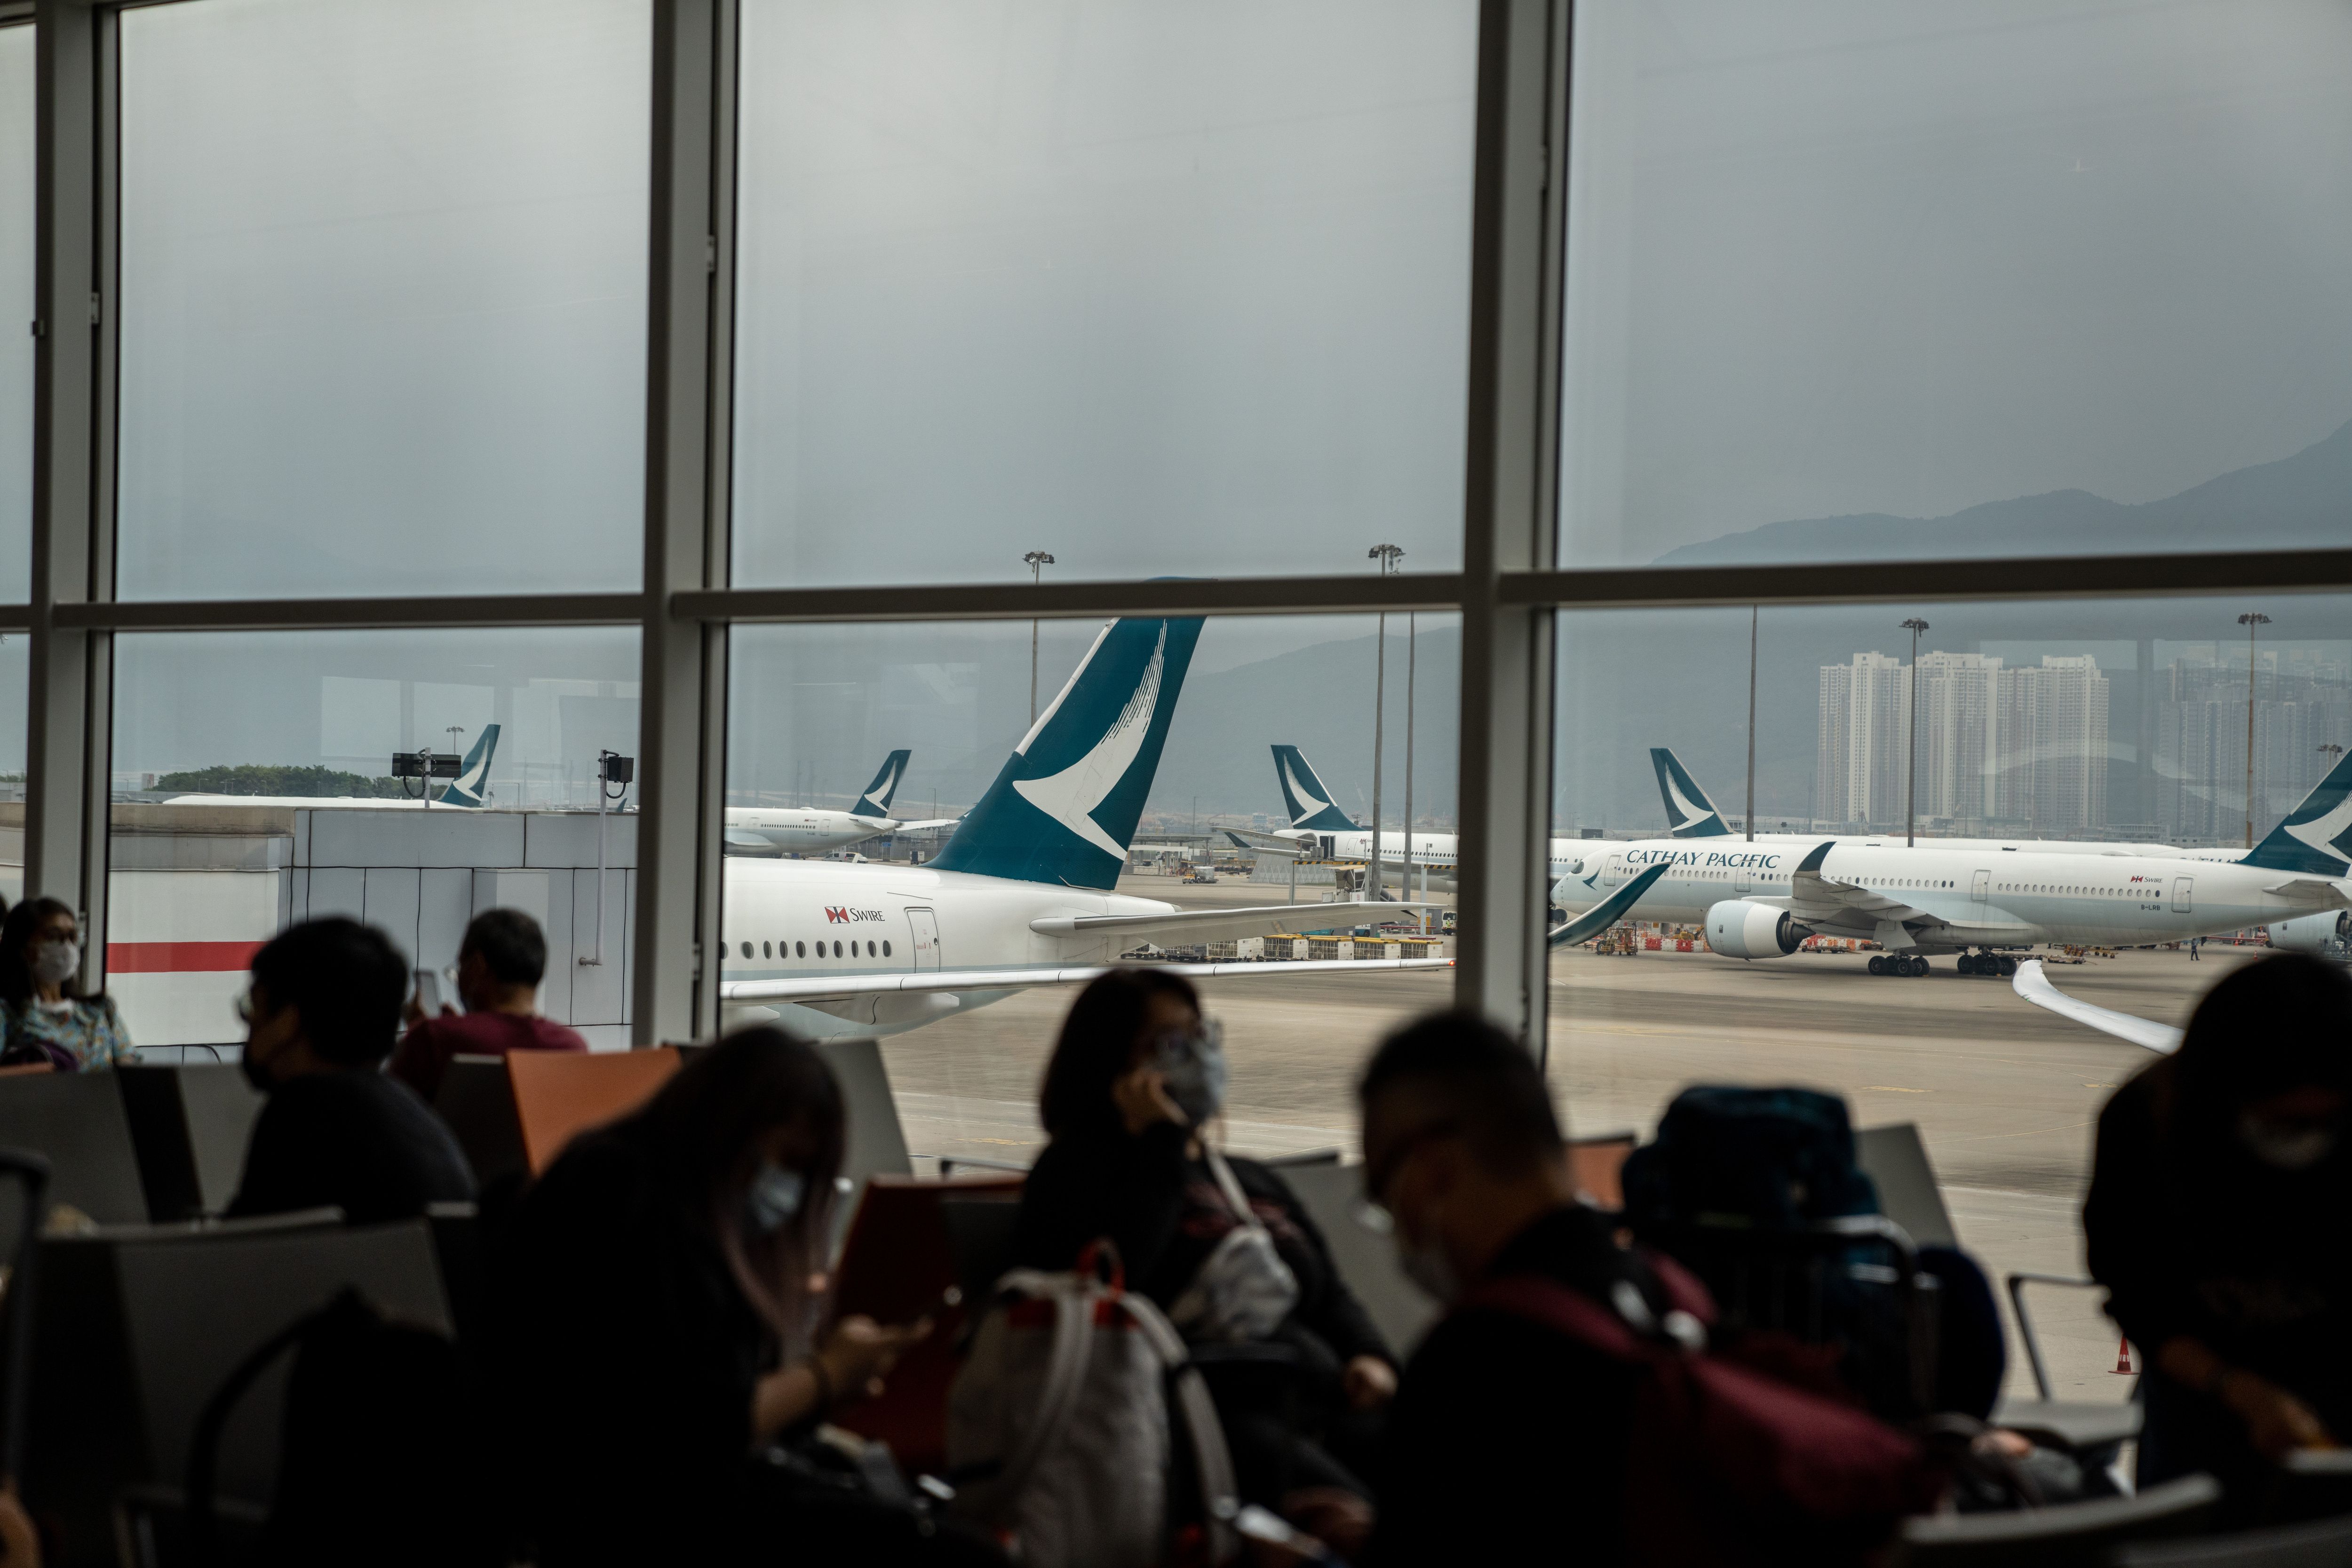 Cathay Pacific planes seen on ground at Hong Kong International Airport. The Hong Kong International Airport during COVID-19 pandemic.